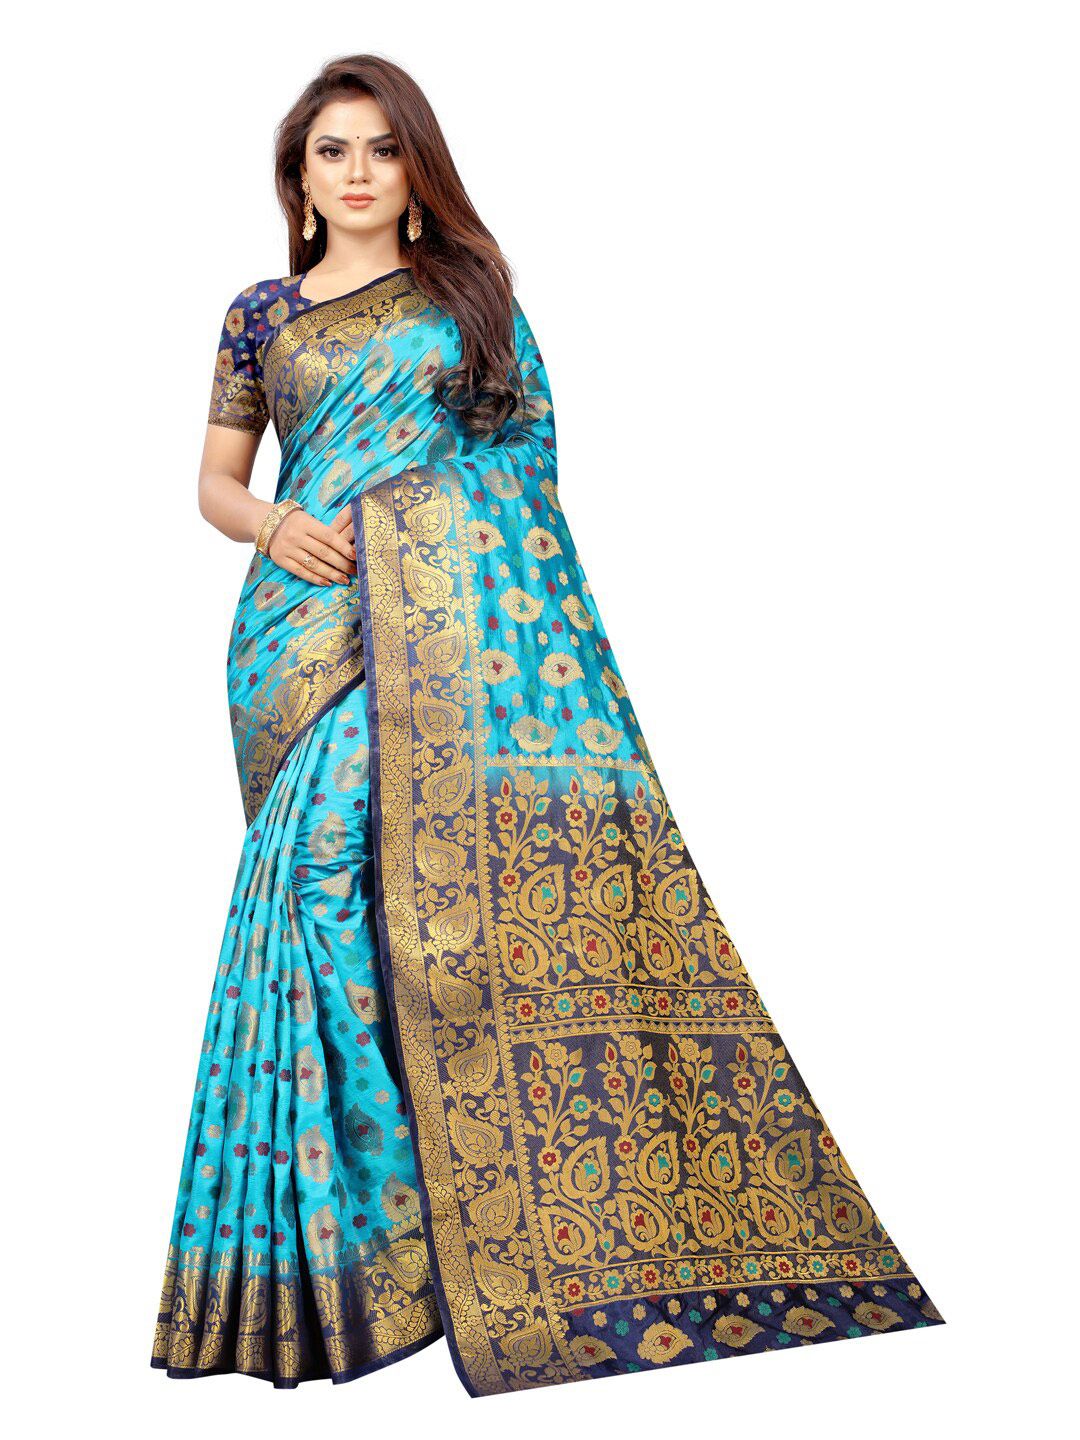 PERFECT WEAR Turquoise Blue & Gold-Toned Ethnic Motifs Zari Silk Cotton Banarasi Saree Price in India